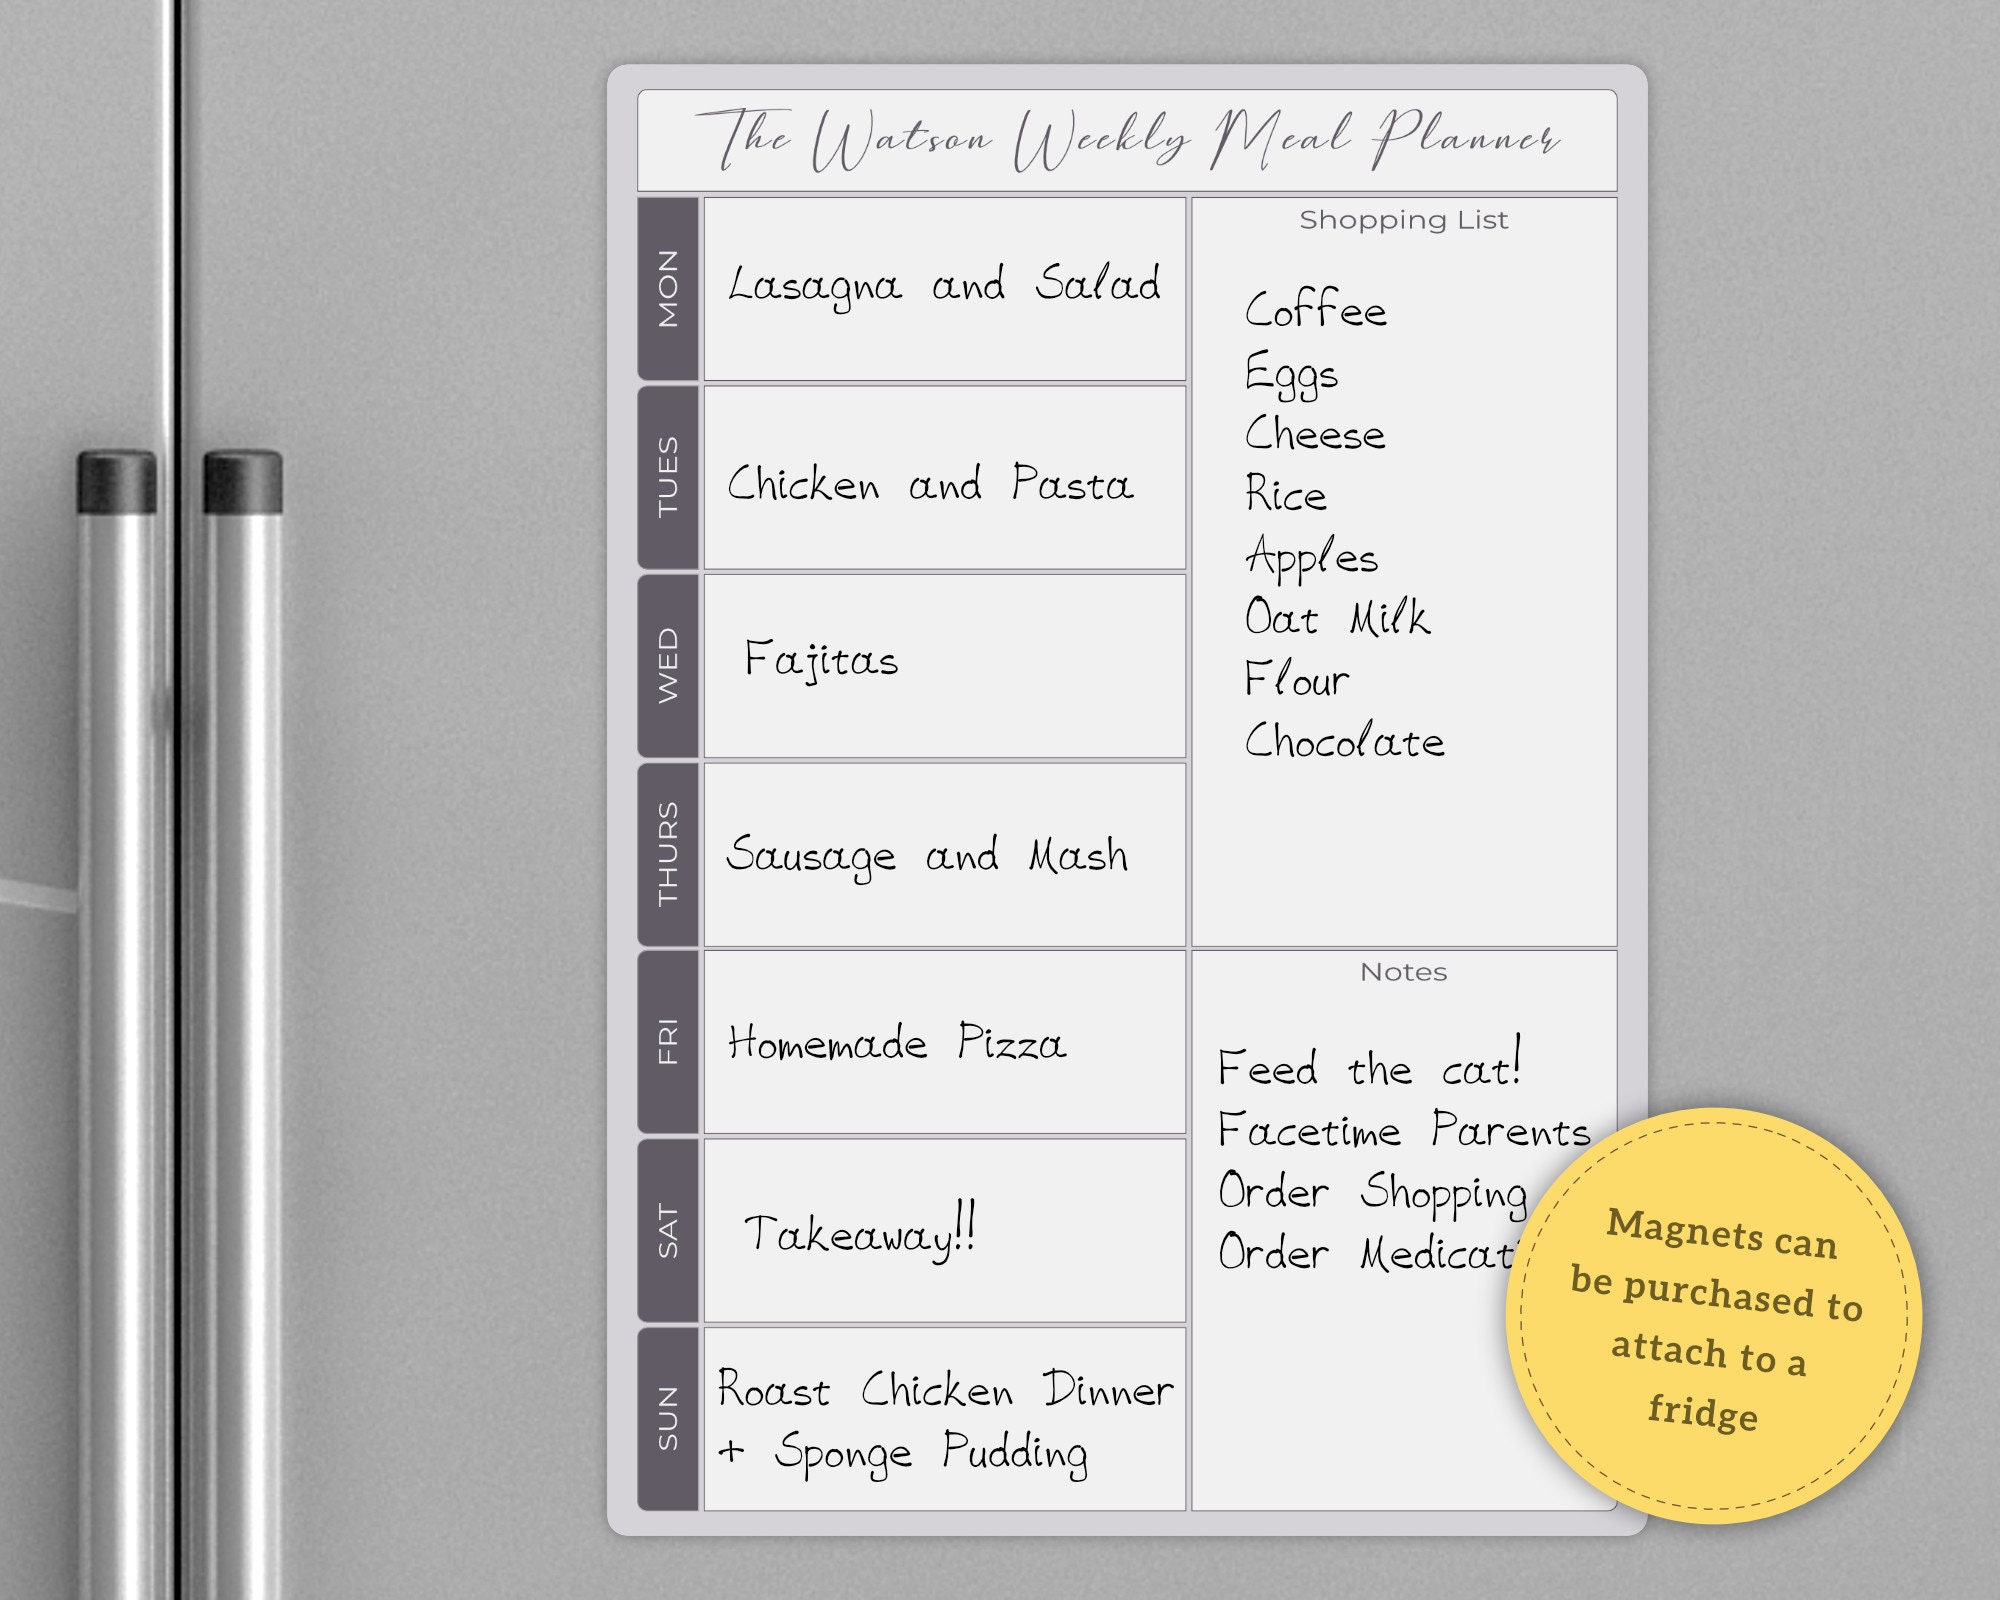 Chalk Board Week Days Meal Menu Planner Events Notes Kitchen Organiser  Plaque